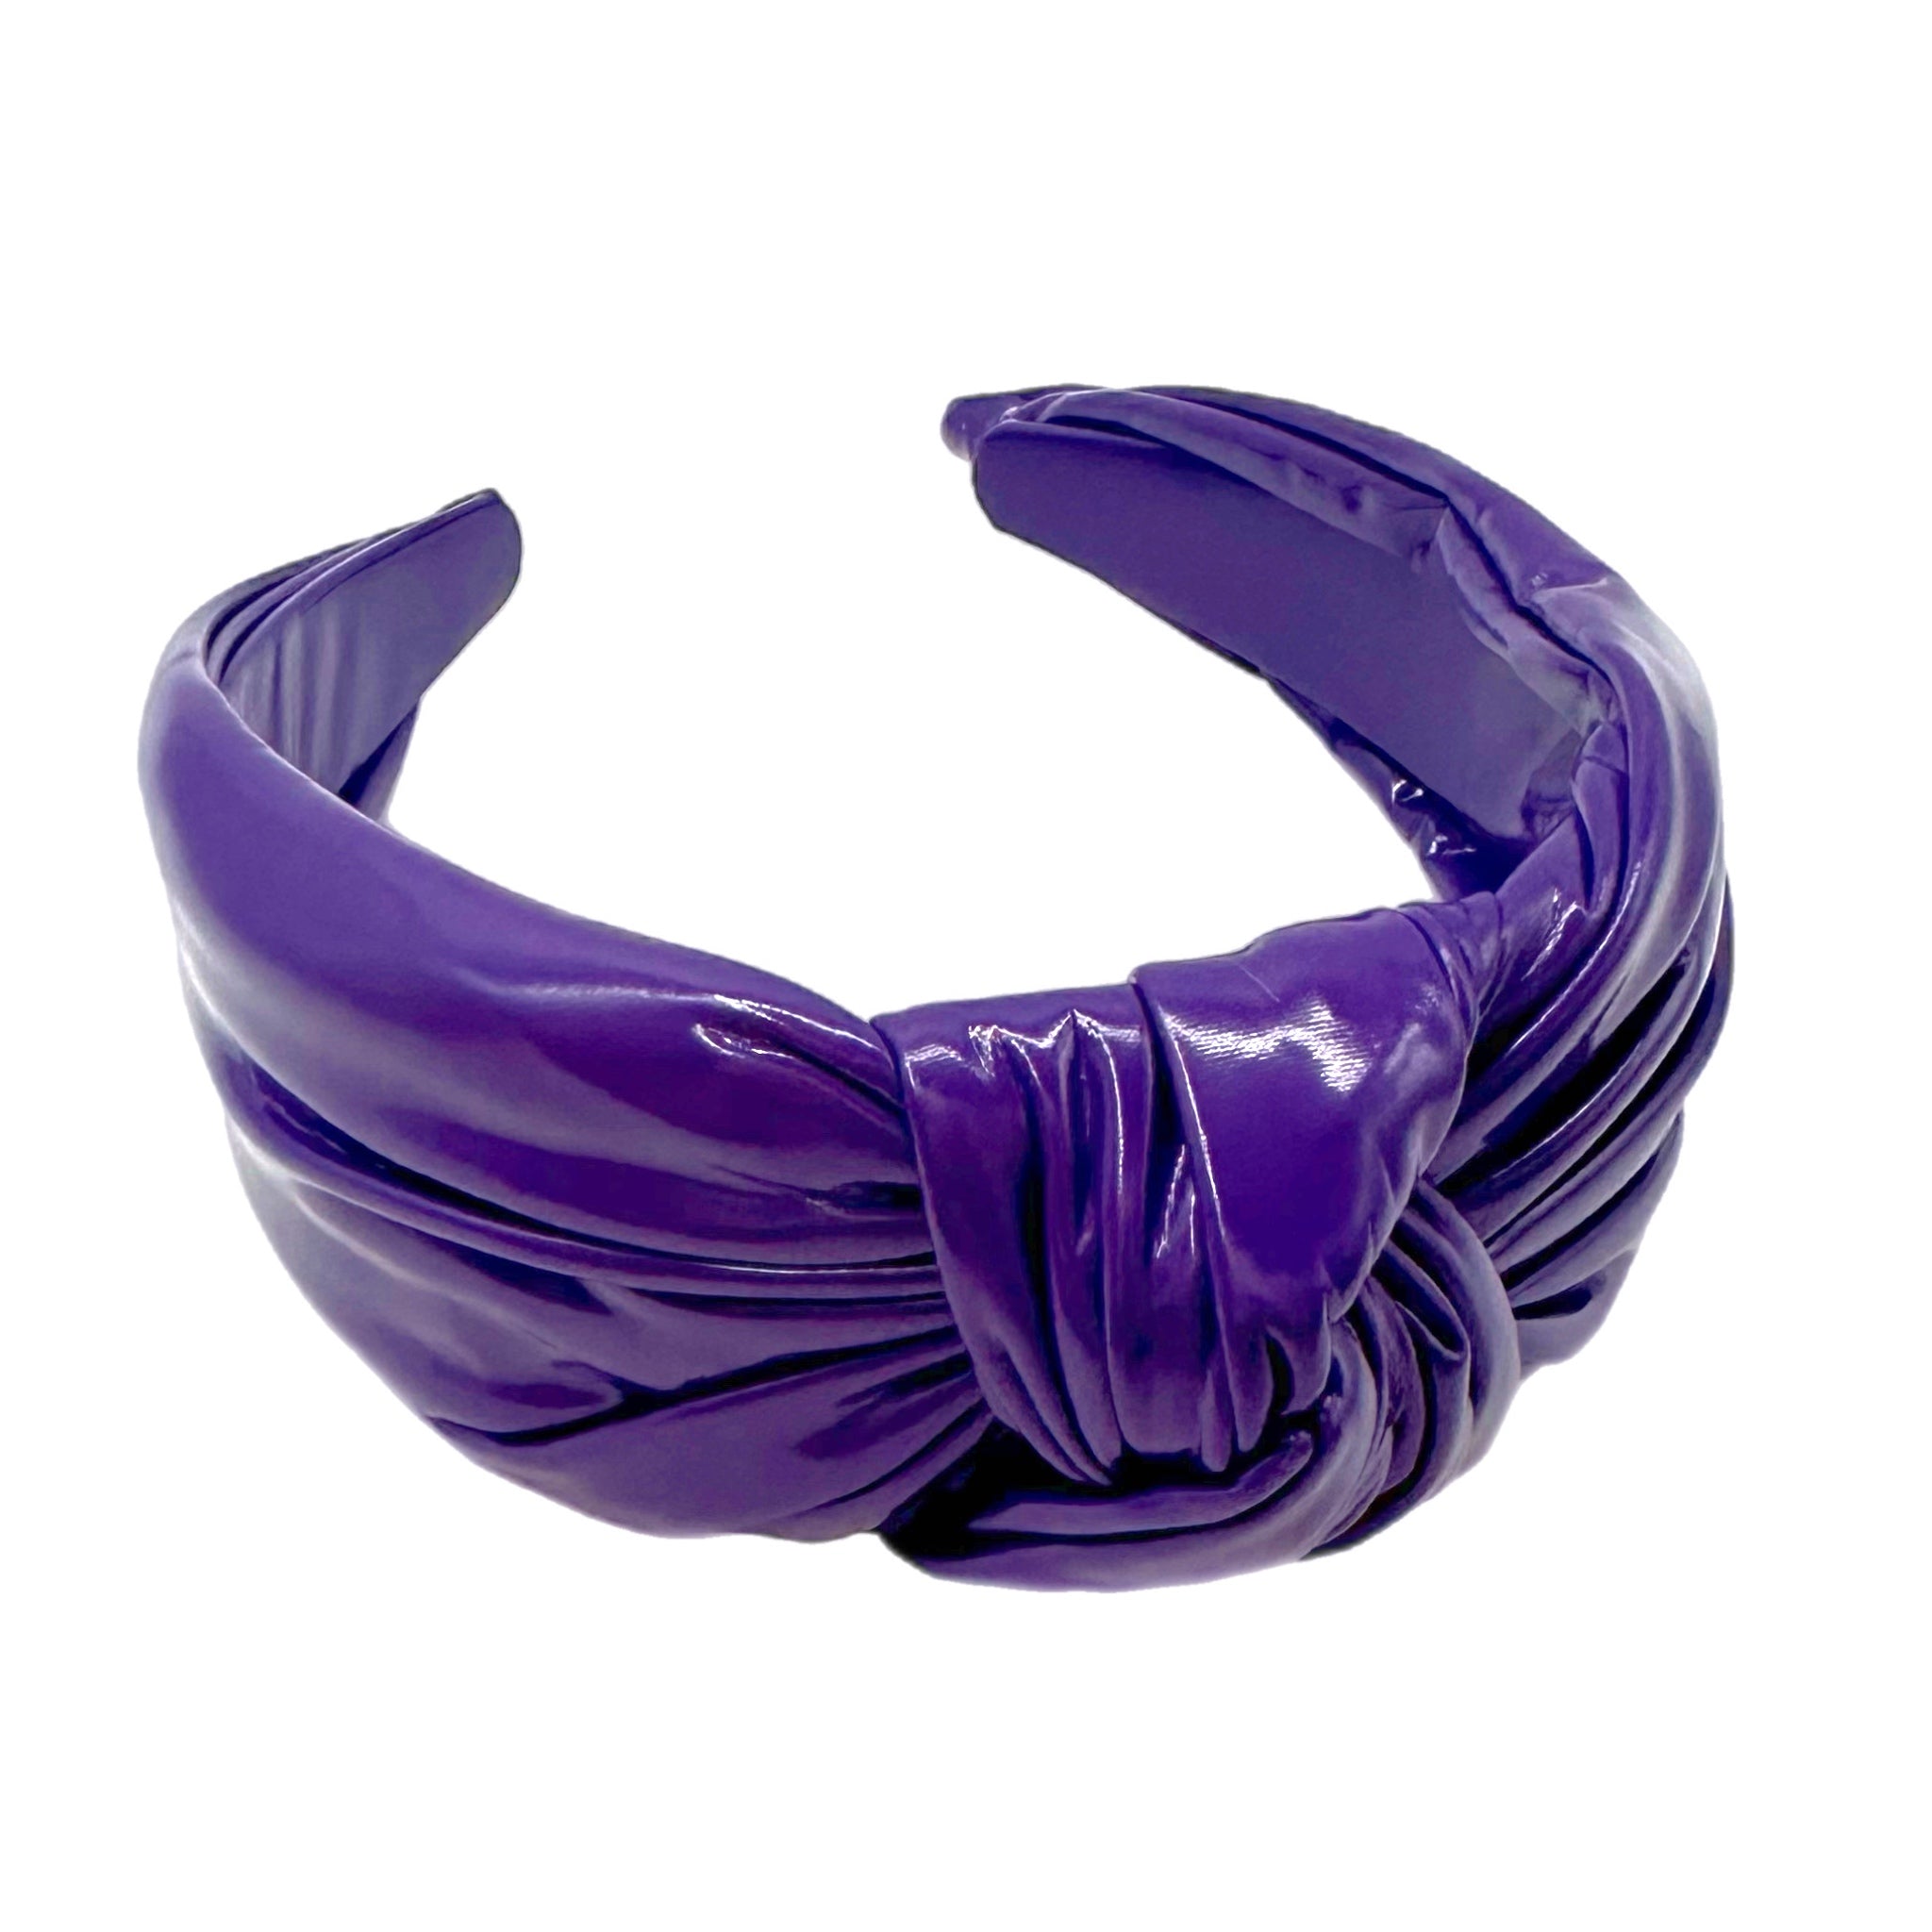 Purple Patent Leather Knotted Headband